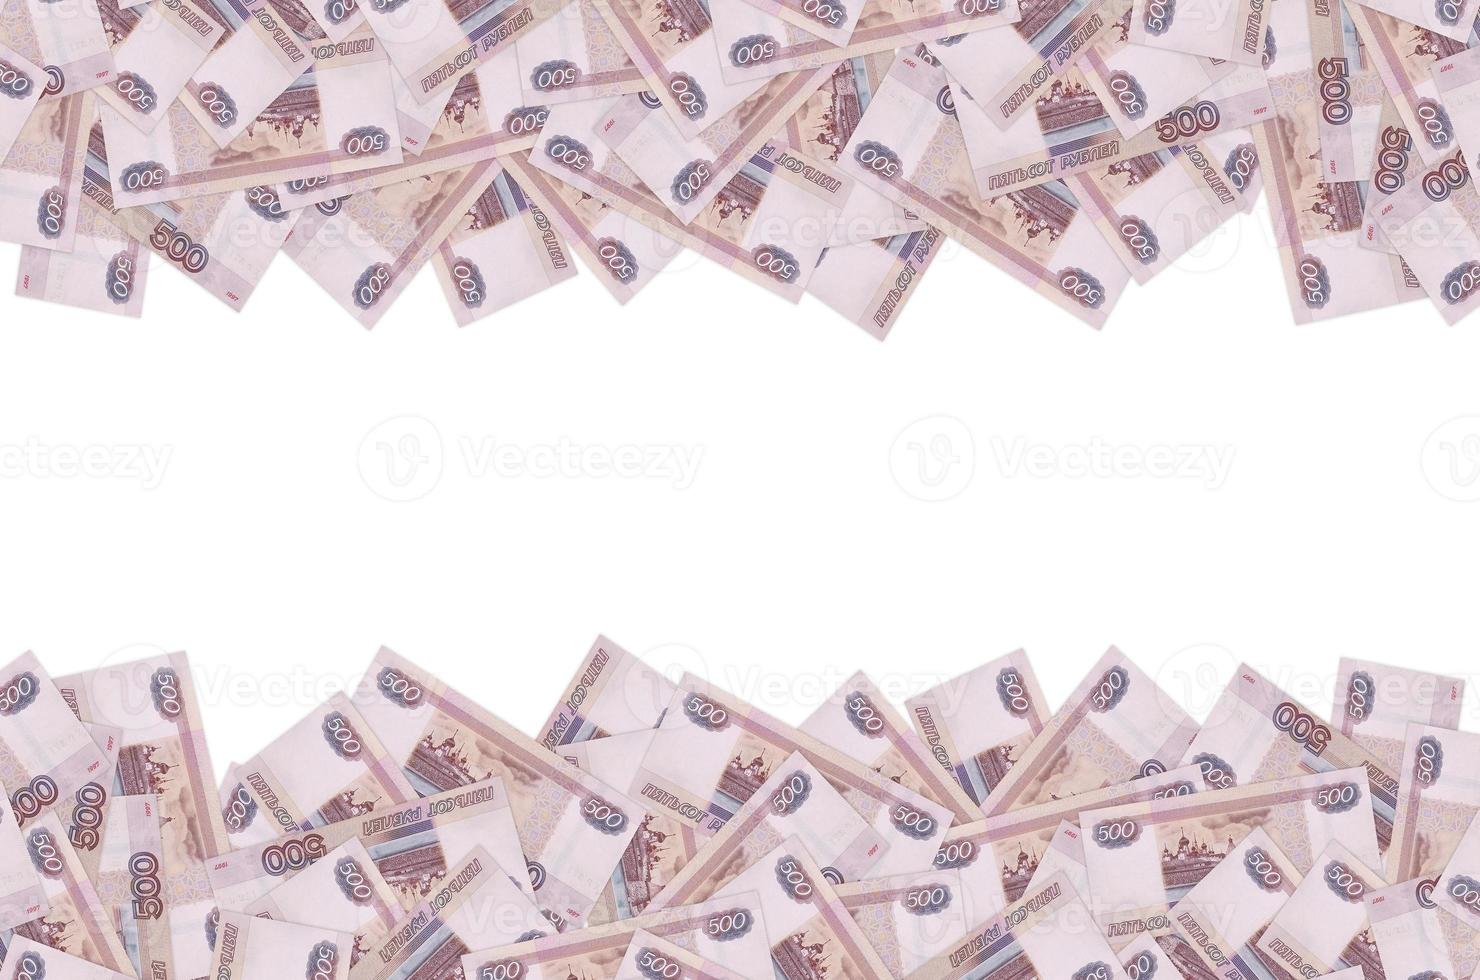 Russian 500 rubles banknote closeup macro bill pattern photo